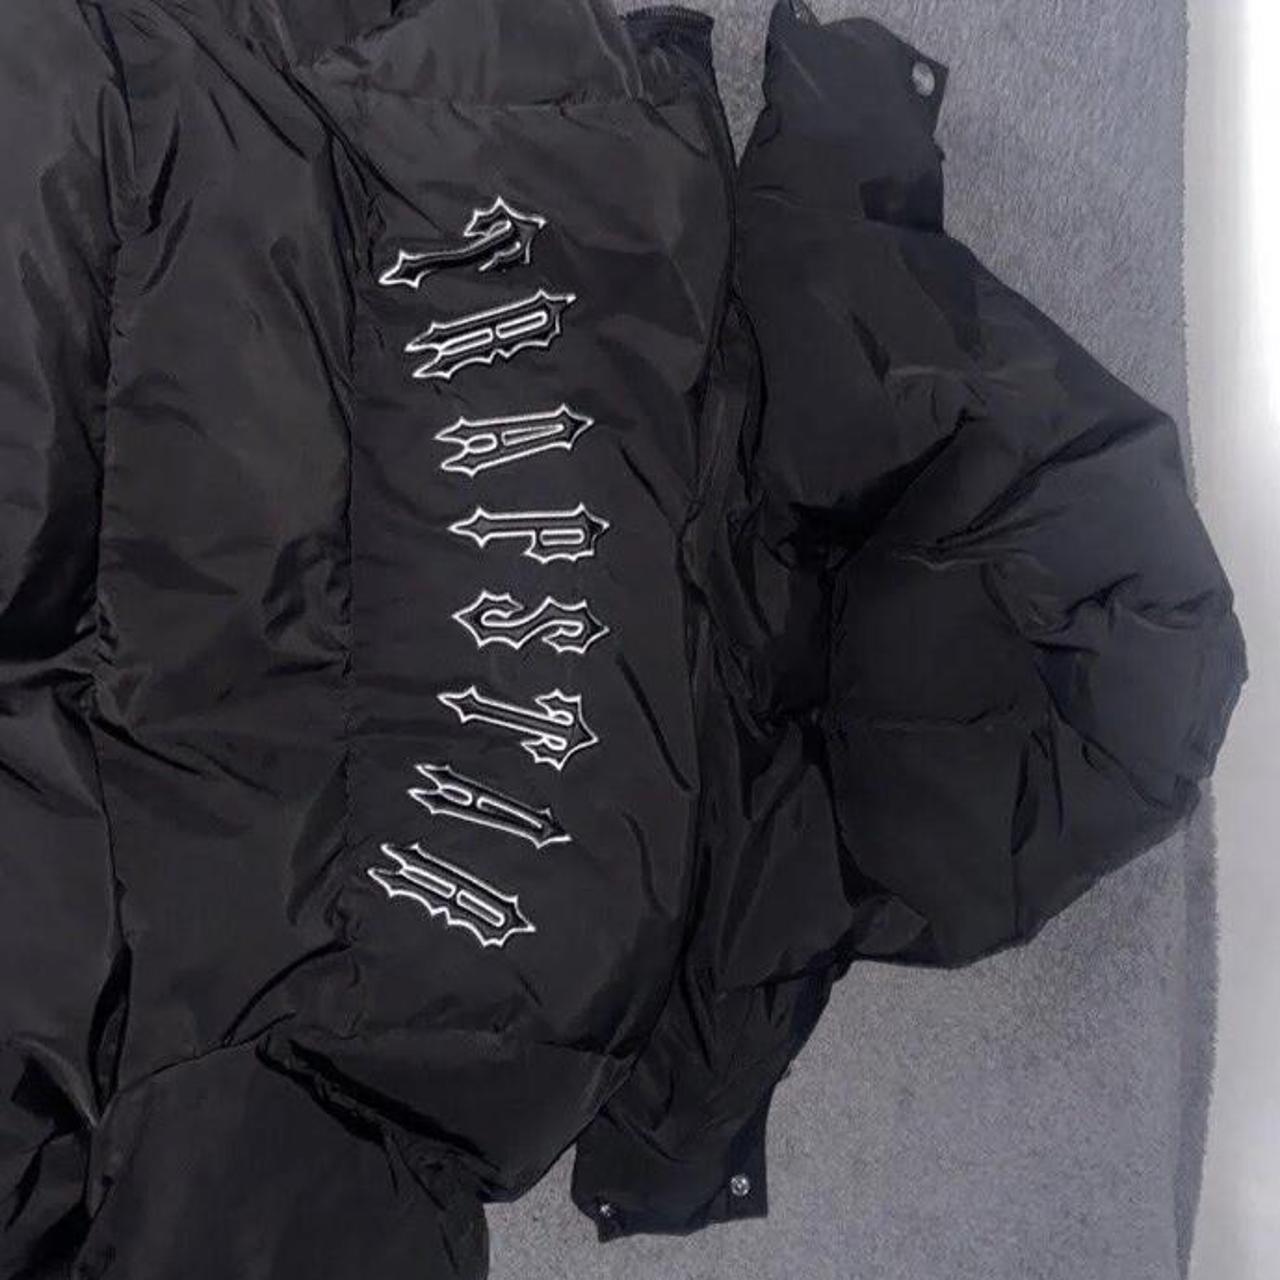 Trapstar iron gate puffer jacket Sizes S-XXL - Depop